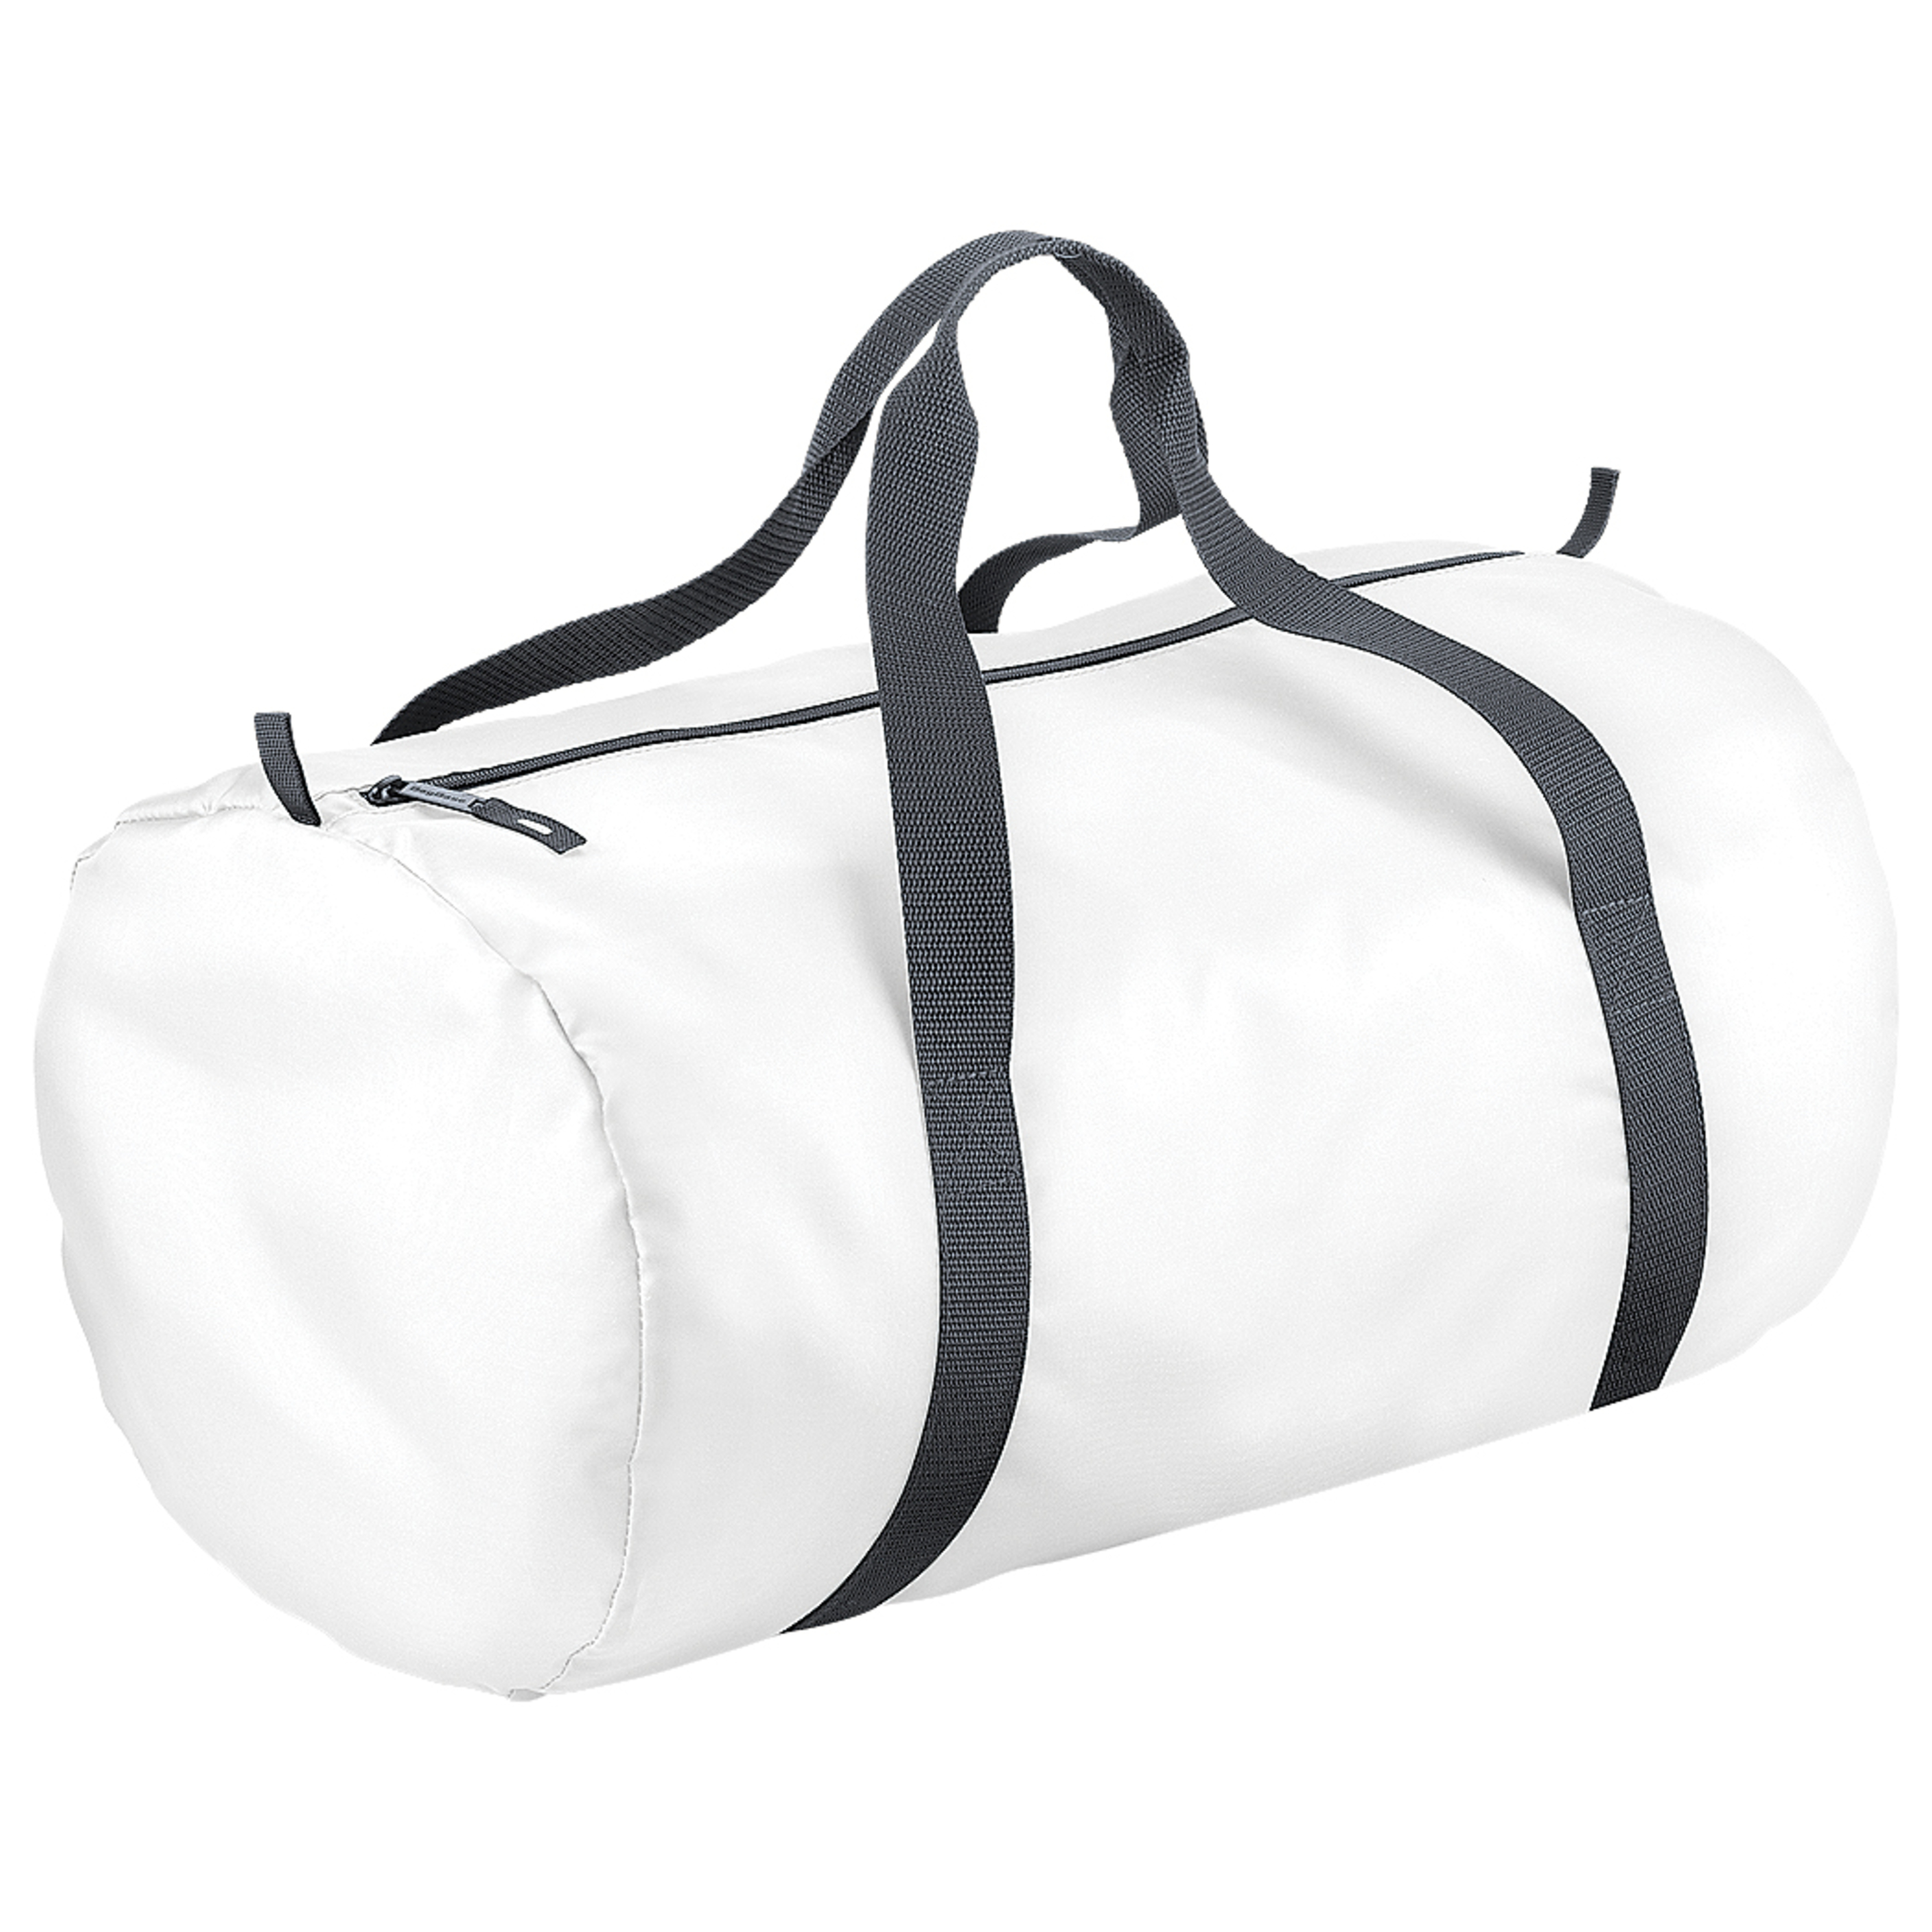 Bolsa De Deporte / De Viaje Impermeable Modelo Barrel Packaway (32 Litros) Bagbase (Blanco)